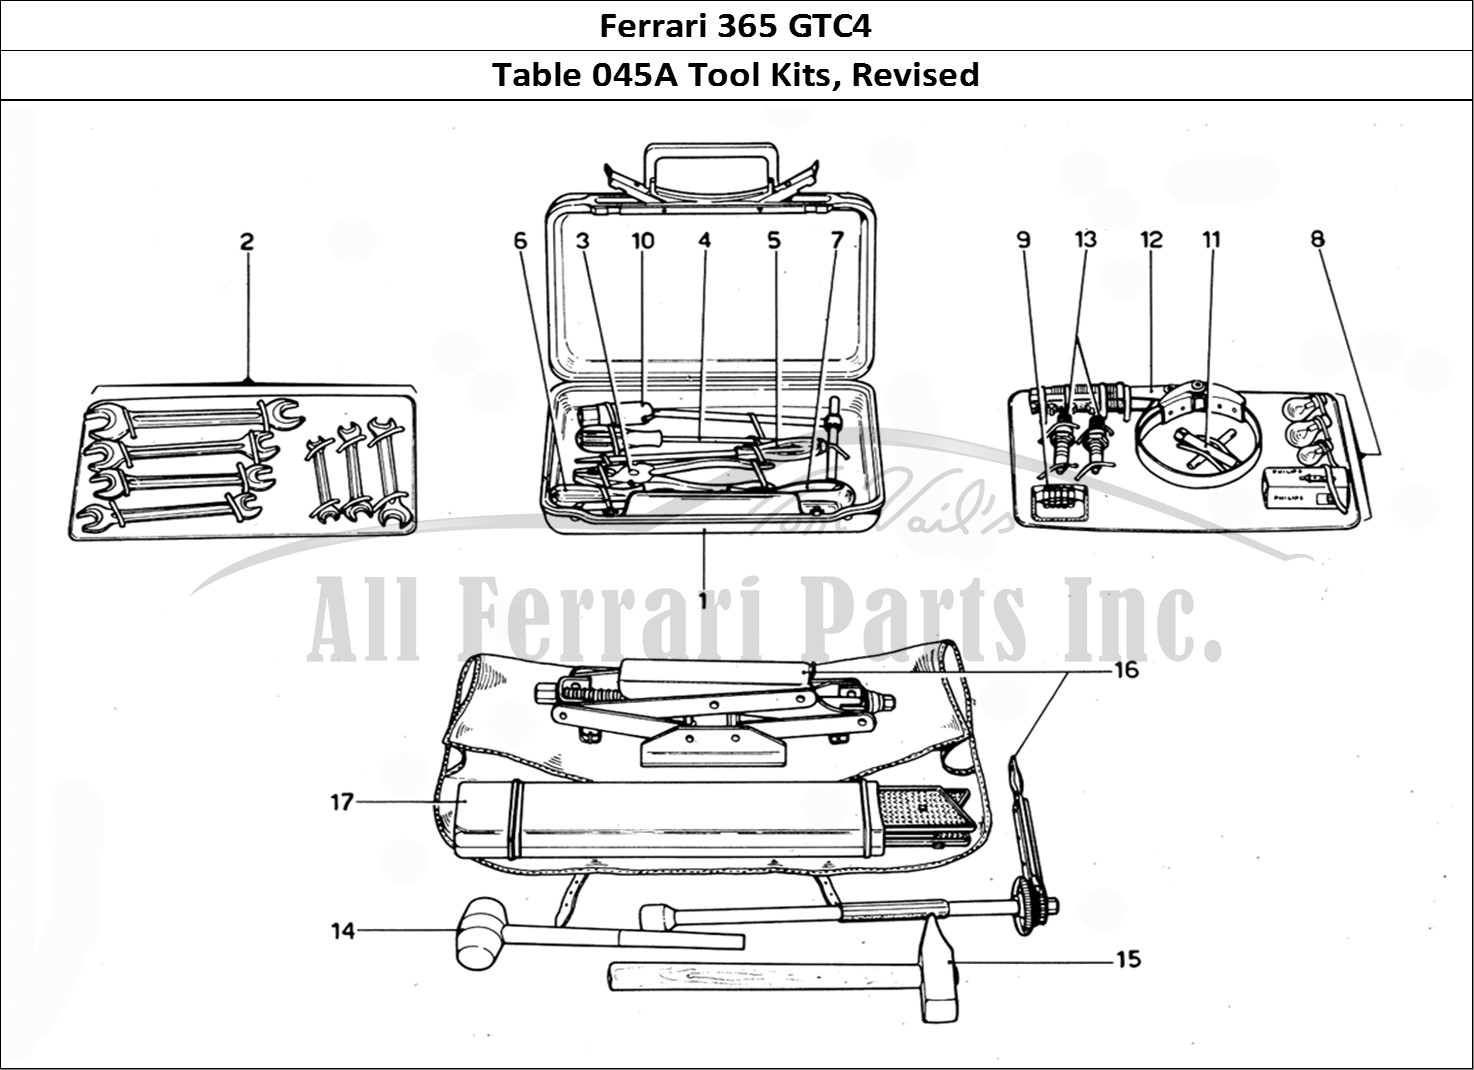 Ferrari Parts Ferrari 365 GTC4 (Mechanical) Page 045 Tool Kits - Revision